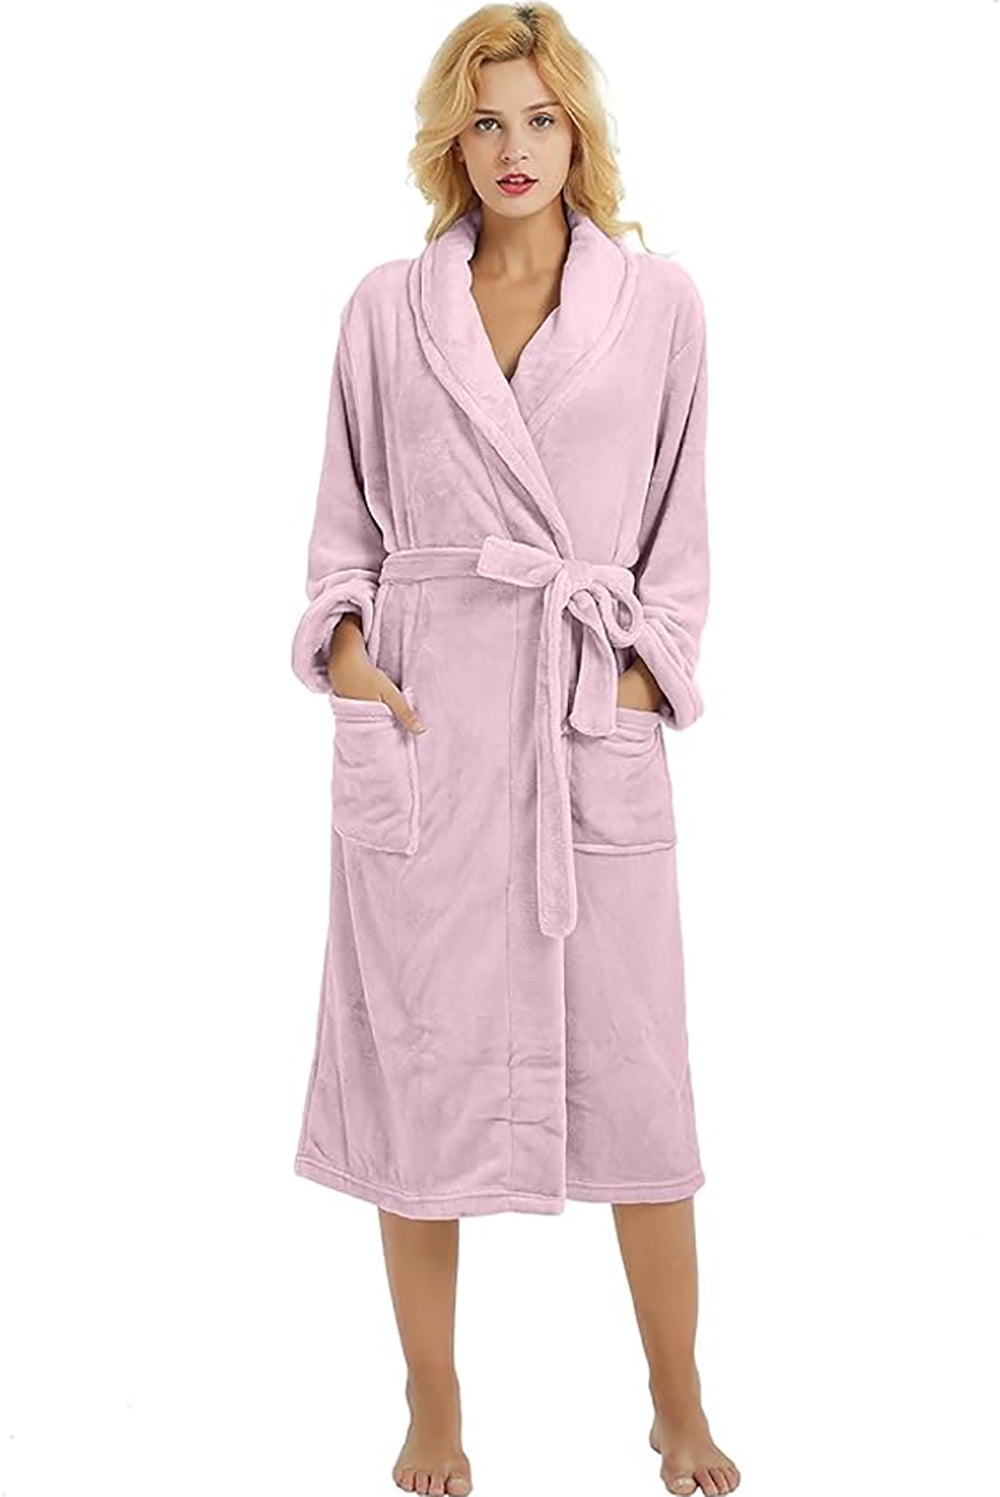 HEARTNICE Womens Fleece Robes, Plush Long Bathrobe Soft Warm Robes,(Light  Grey,L-XL) 